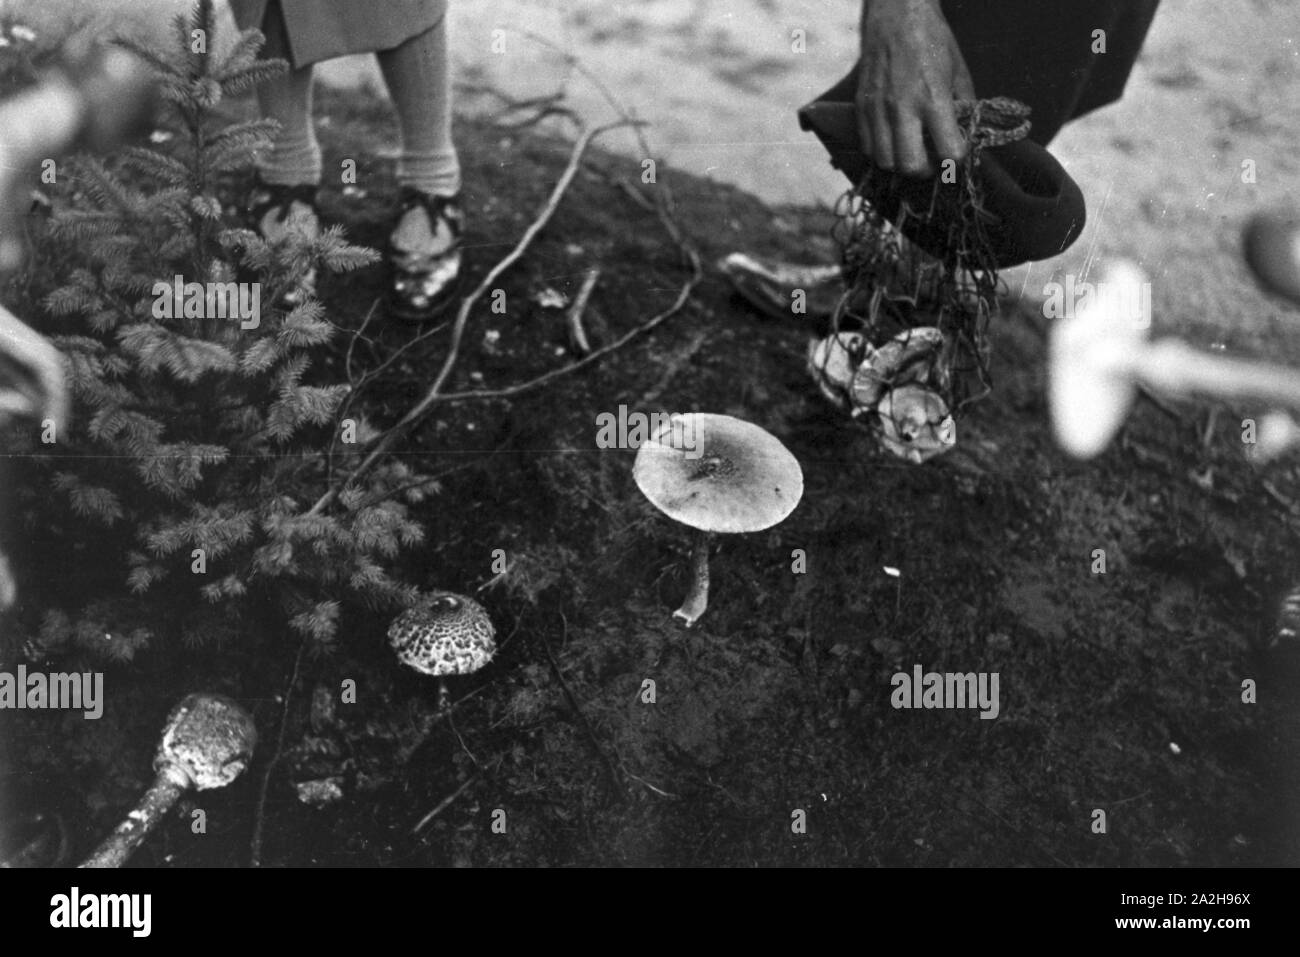 Pilzsammler suchen Champignons im Wald, Deutschland 1930er Jahre. Collectors looking for white mushrooms in the forest, Germany 1930s. Stock Photo